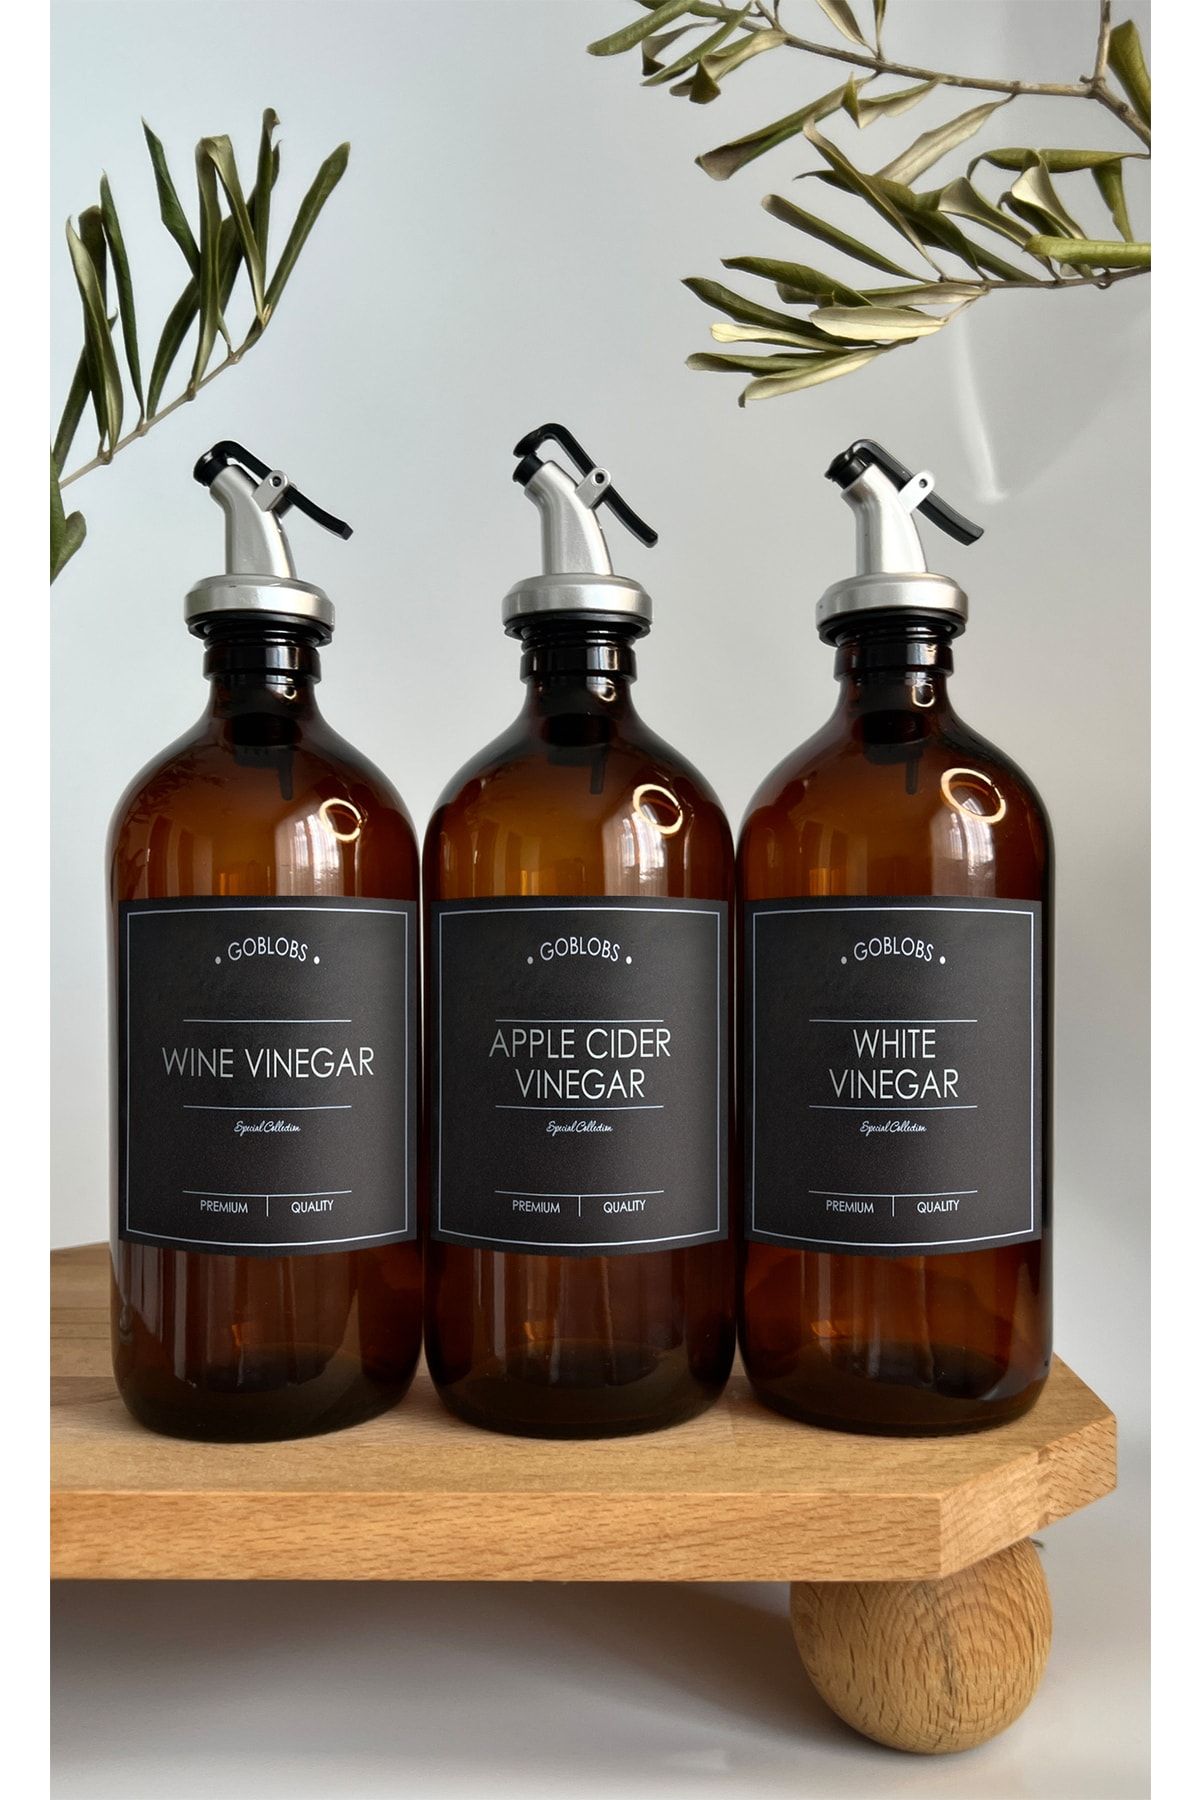 GO BLOBS Amber Cam Şişe 3' Lü 500ml Wine Vinegar & Applecider Vinegar & White Vinegar Siyah Etiketli Sosluk